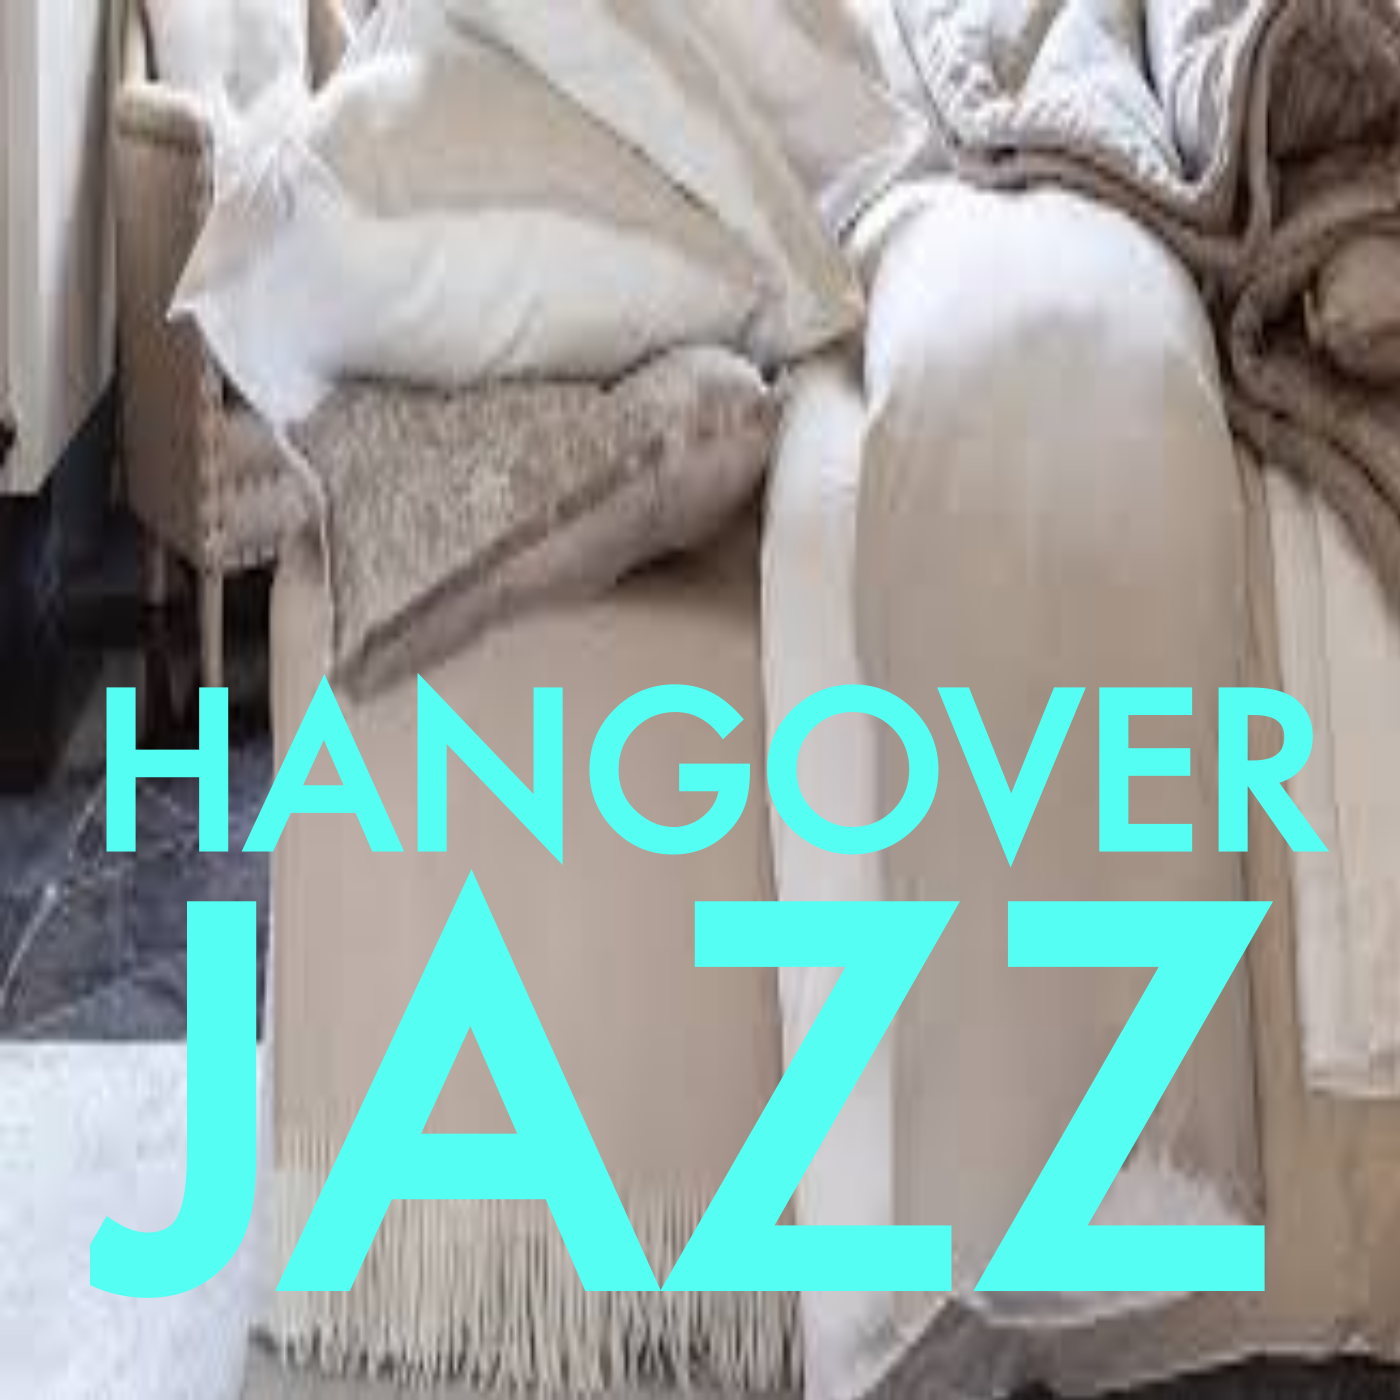 Hangover Jazz